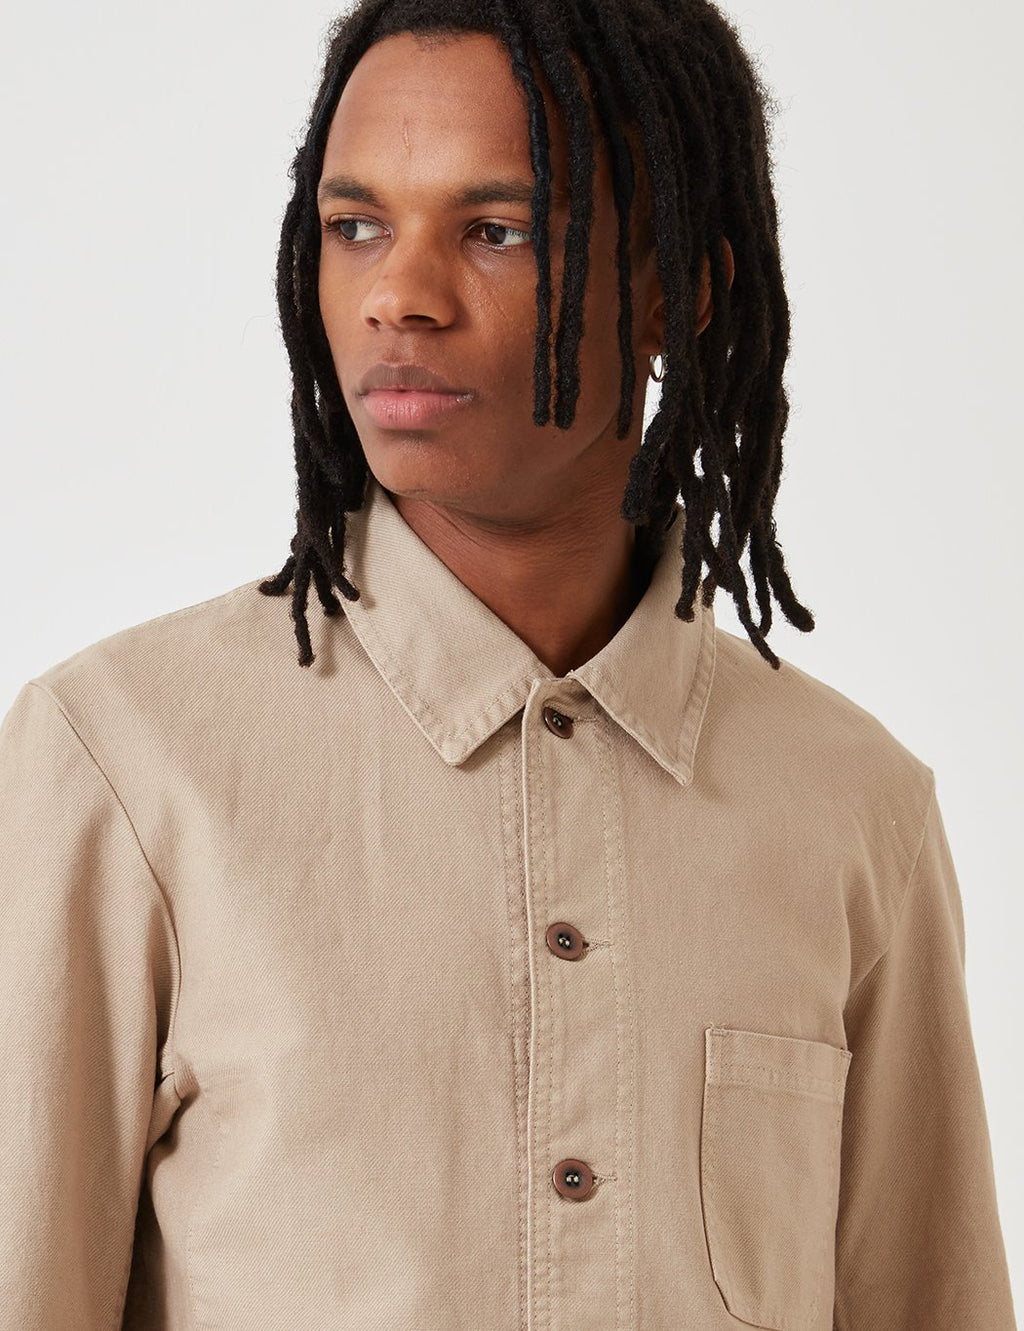 Vetra French Workwear Jacket (Dungaree Wash) - Chalk | URBAN EXCESS.